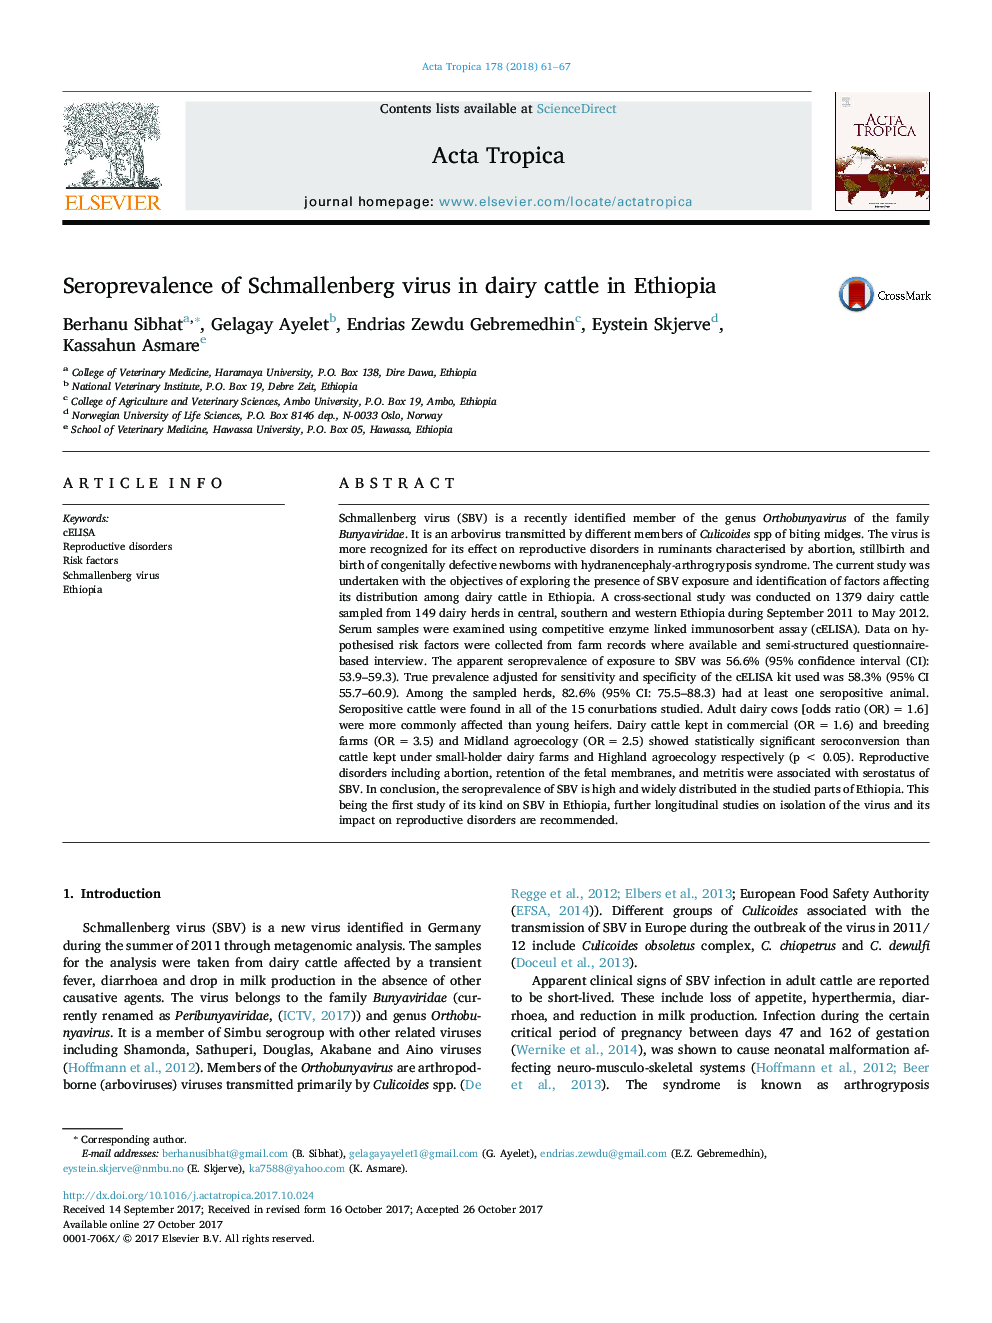 Seroprevalence of Schmallenberg virus in dairy cattle in Ethiopia